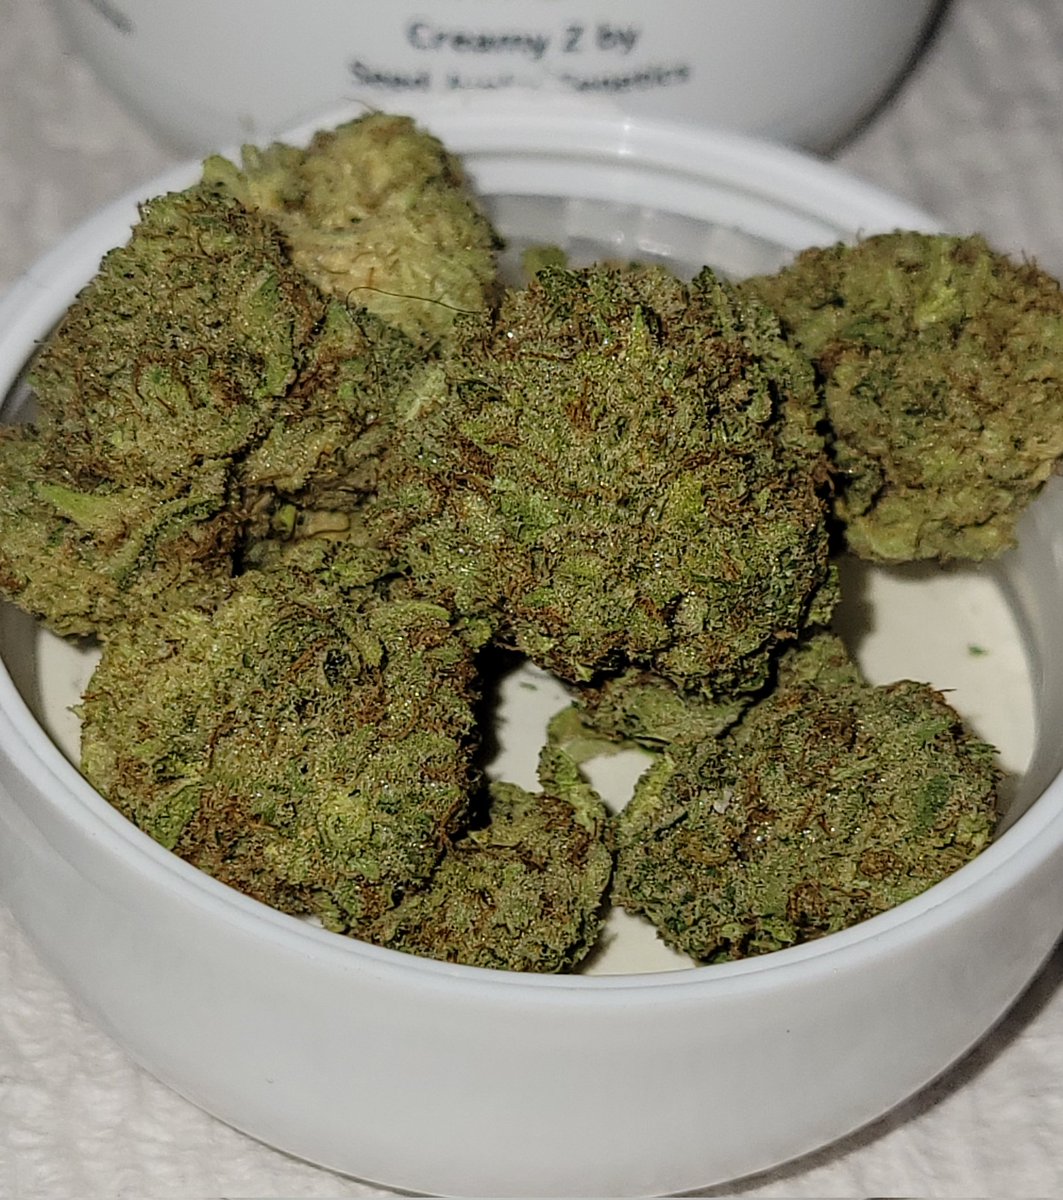 Creamy Z 😋🔥💨👍
#seedjunky
#sweetgas
#CannabisCommunity